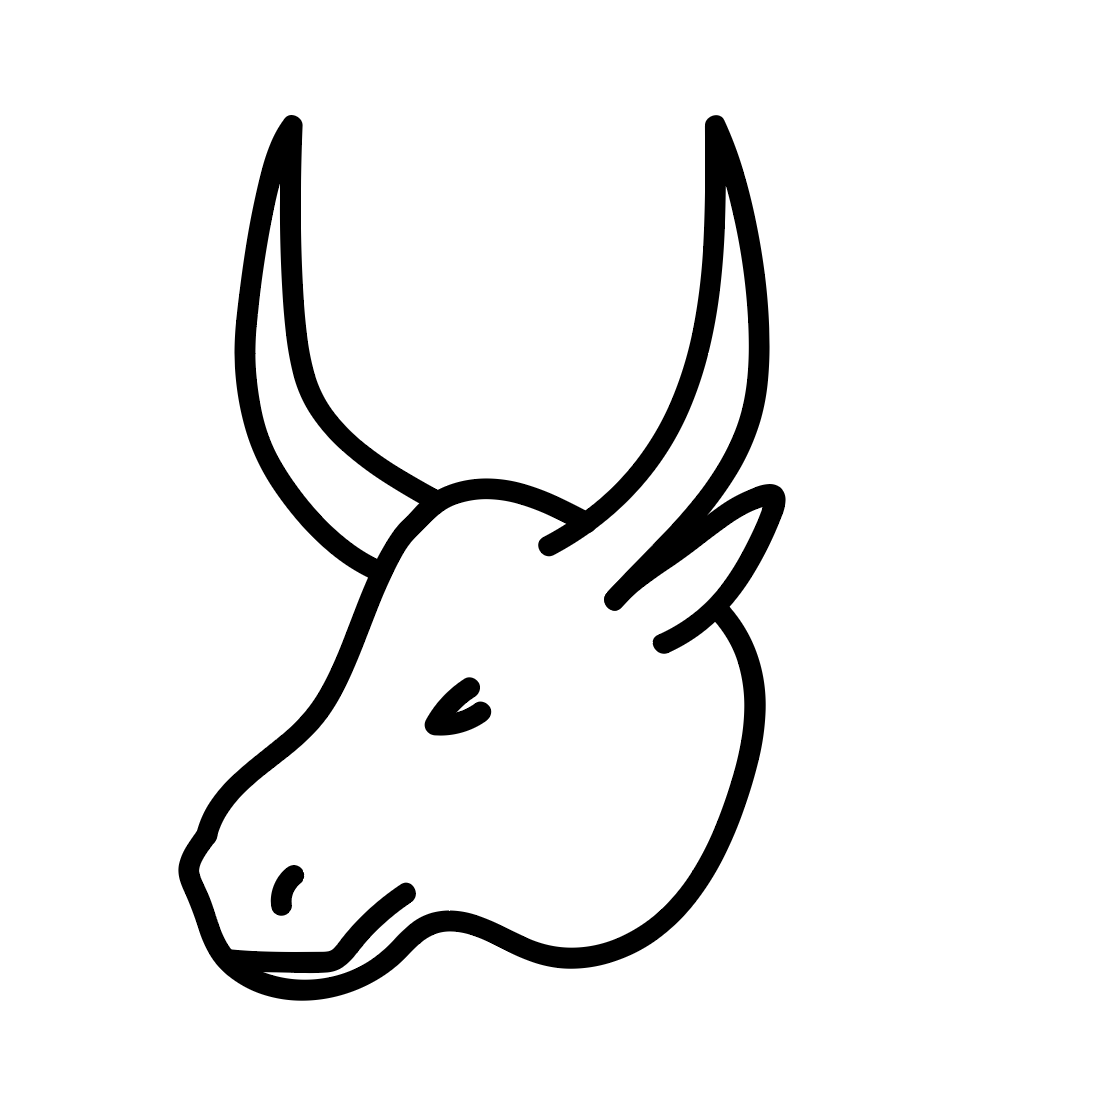 Bull's head character